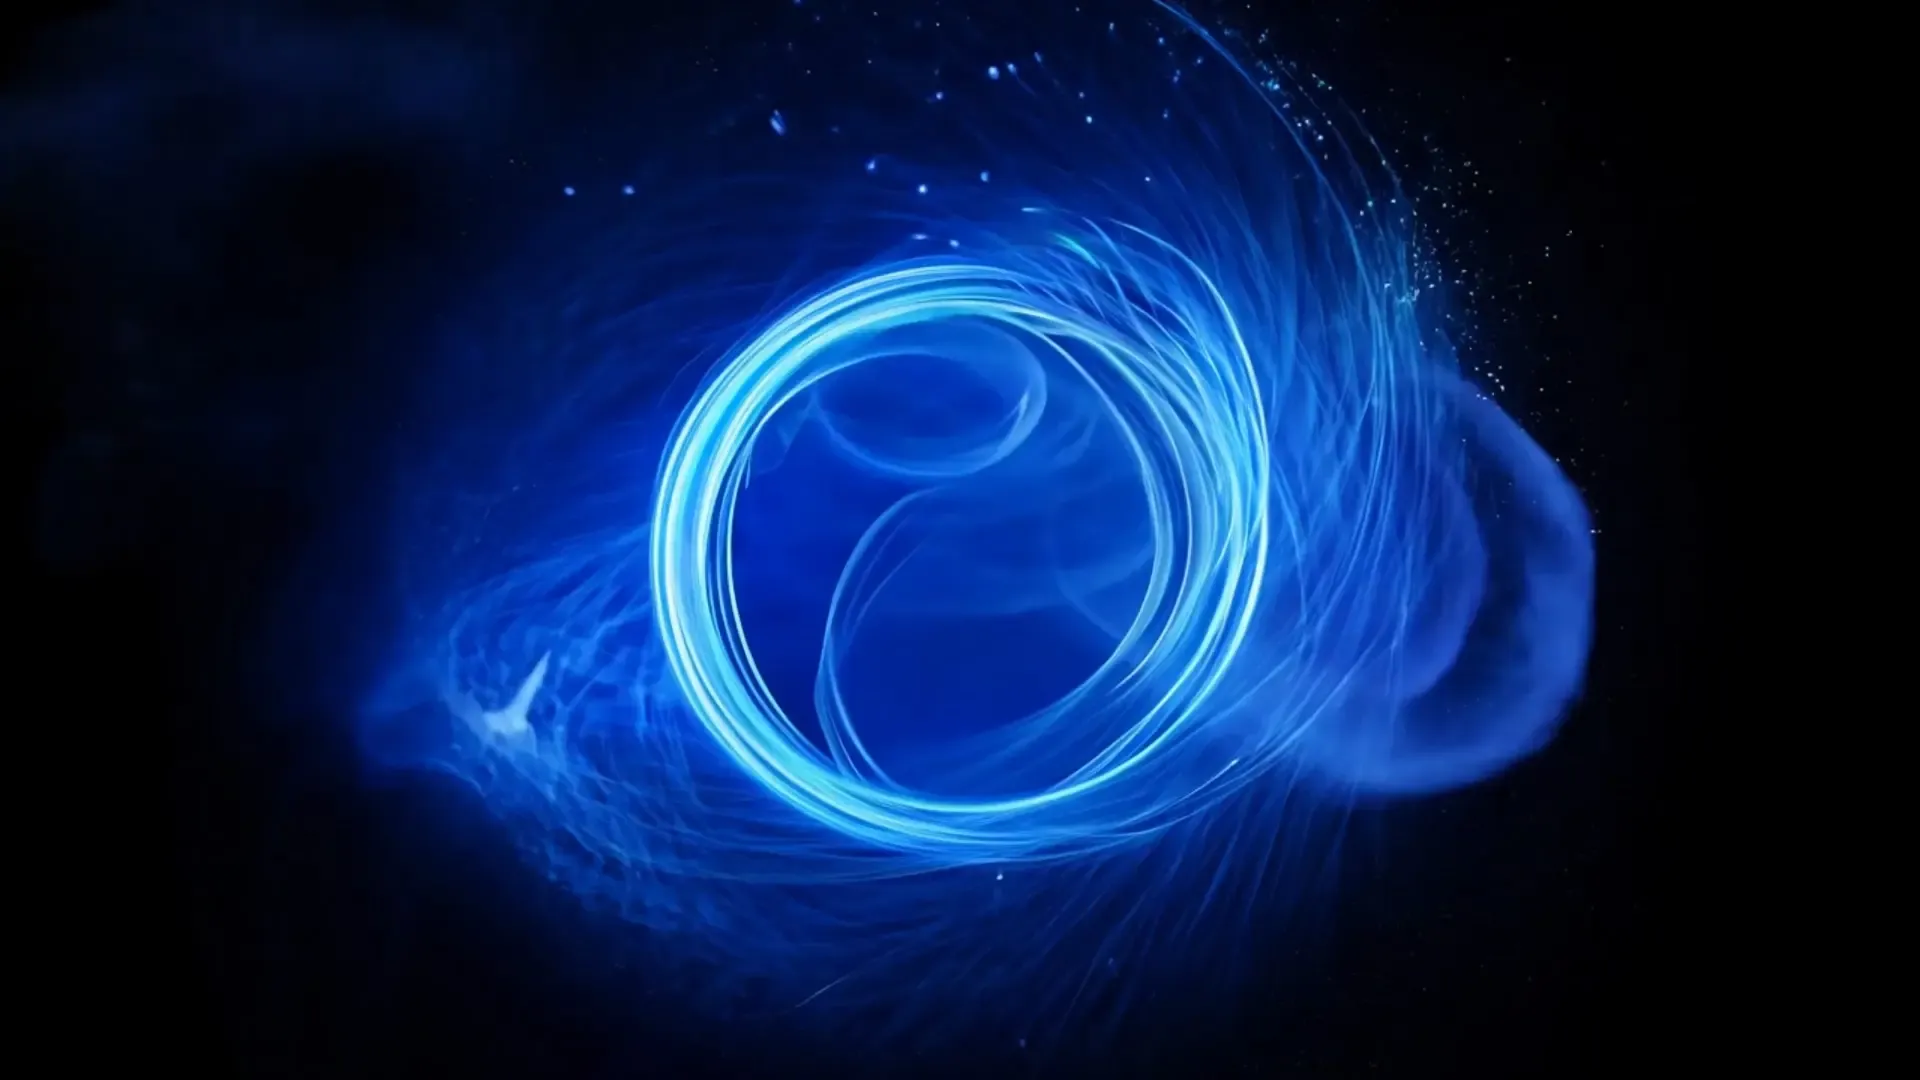 Blue Smoke Whirl Background for Logo Animation